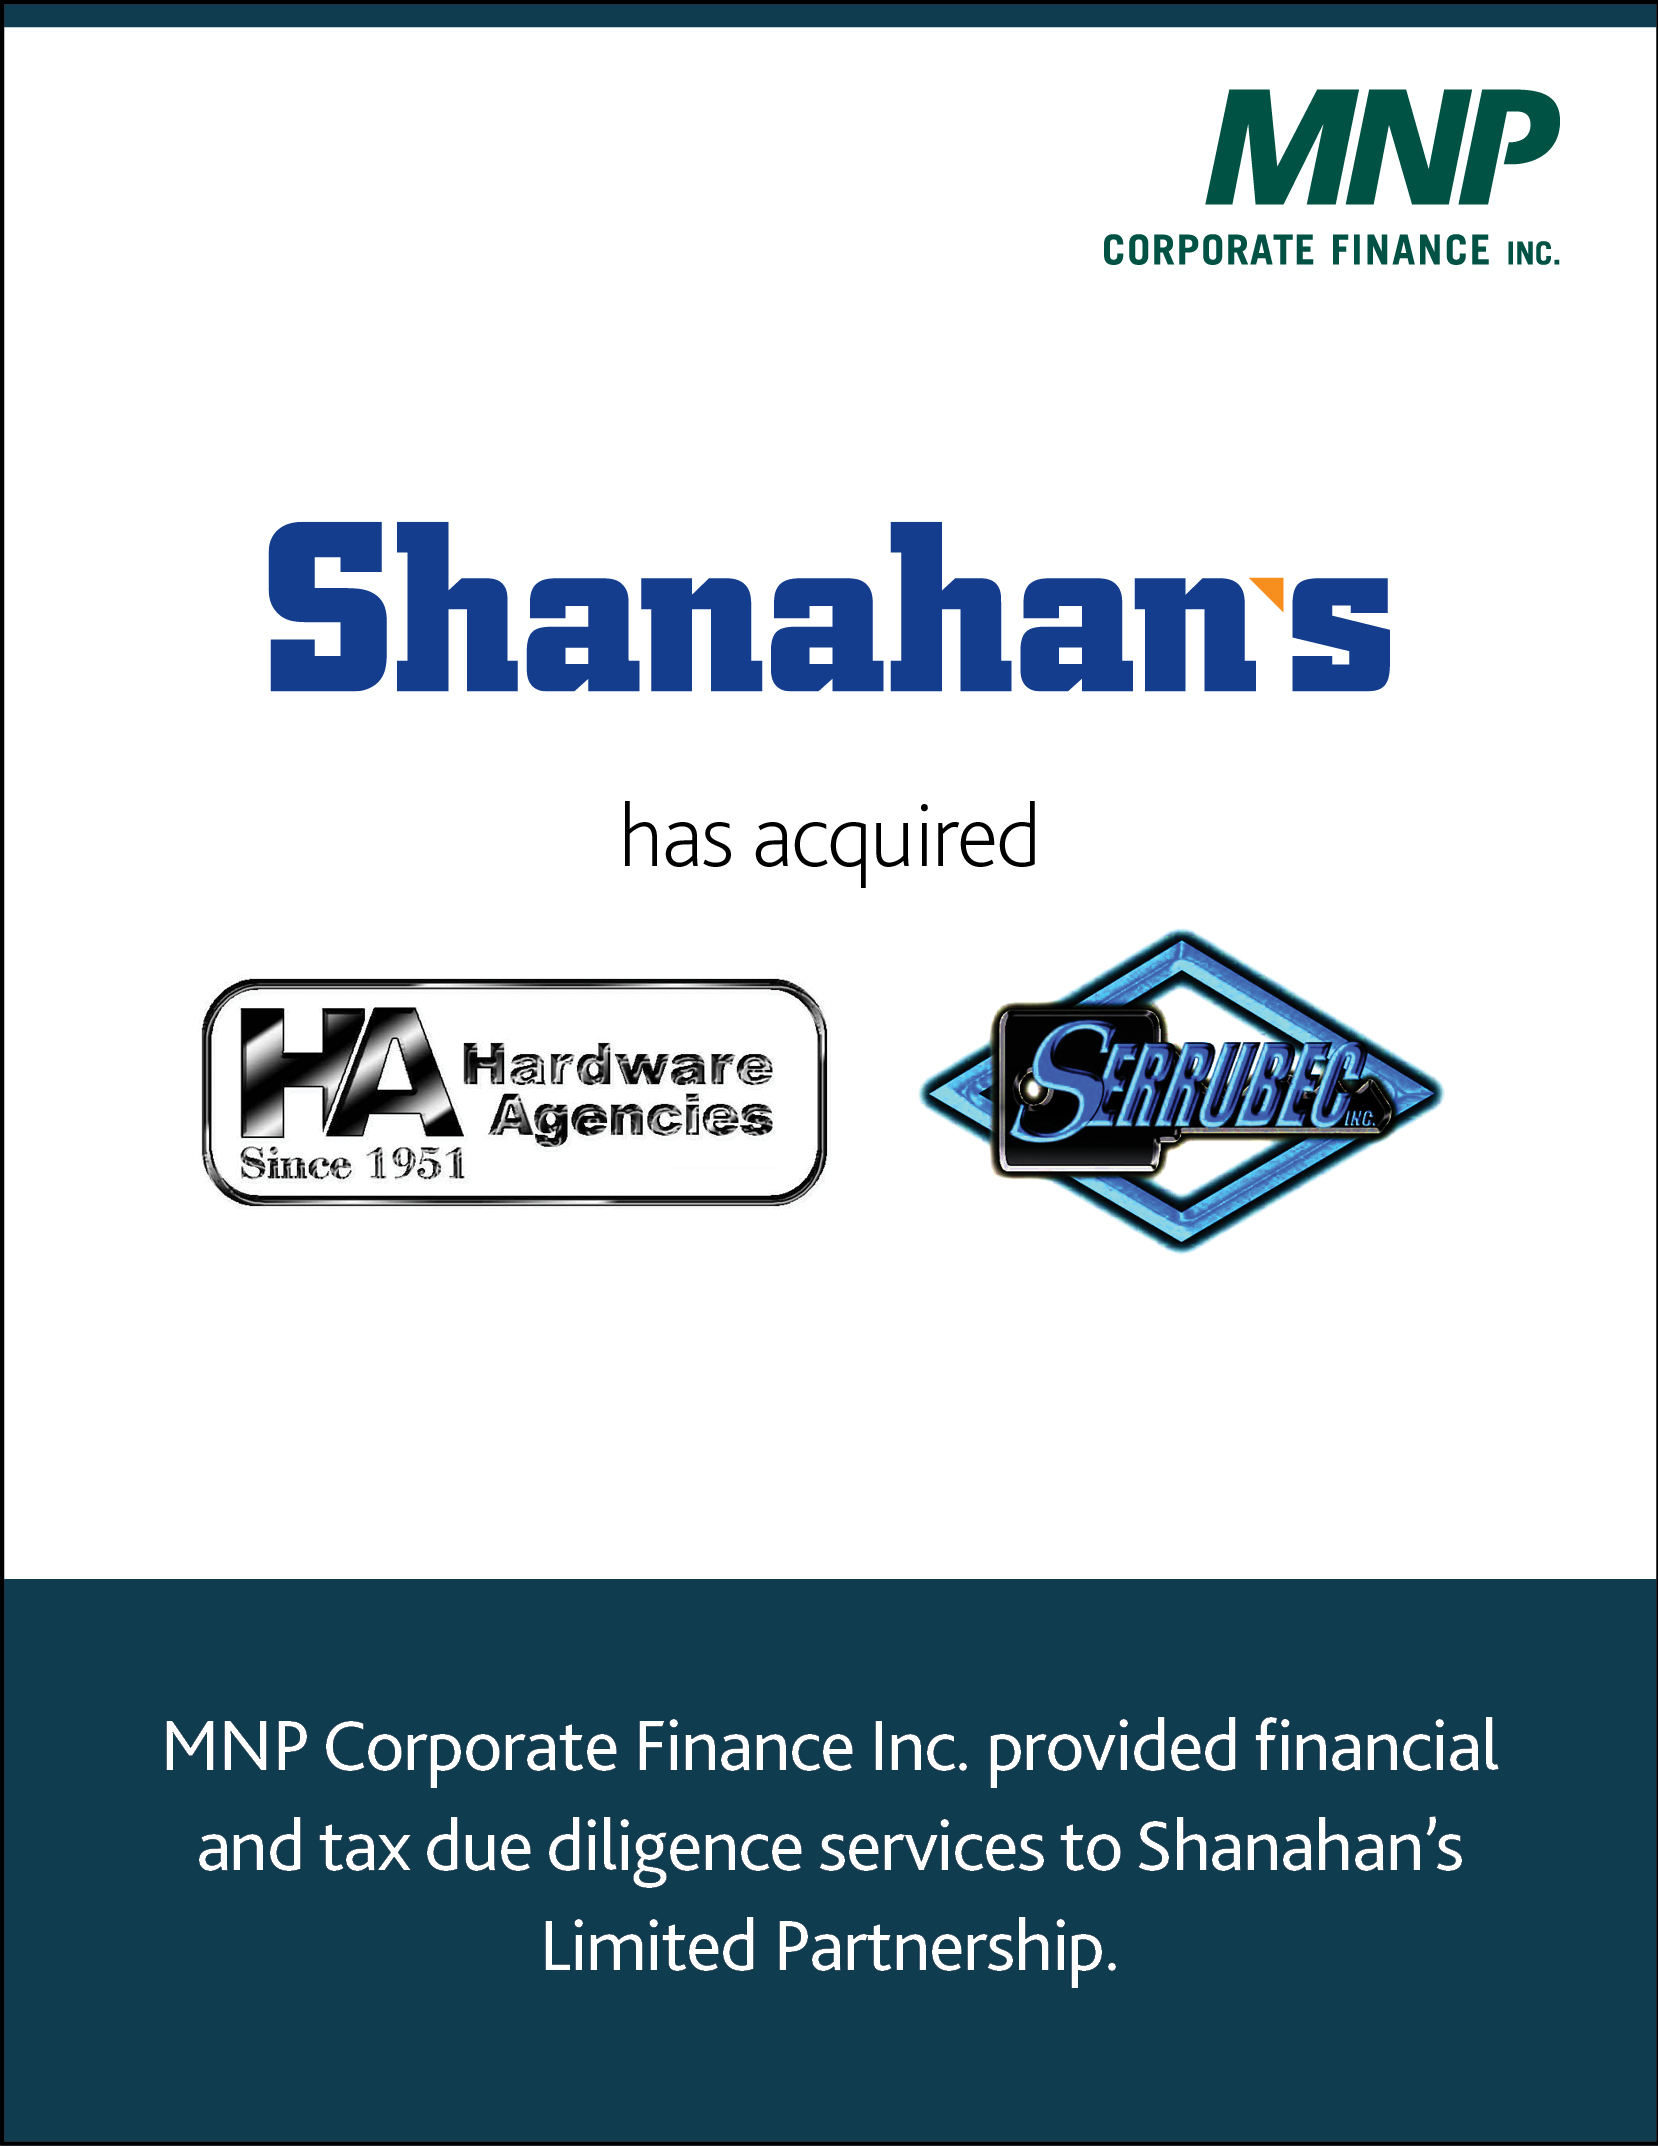 Shanahan's has acquired Hardware Agencies Serrubec